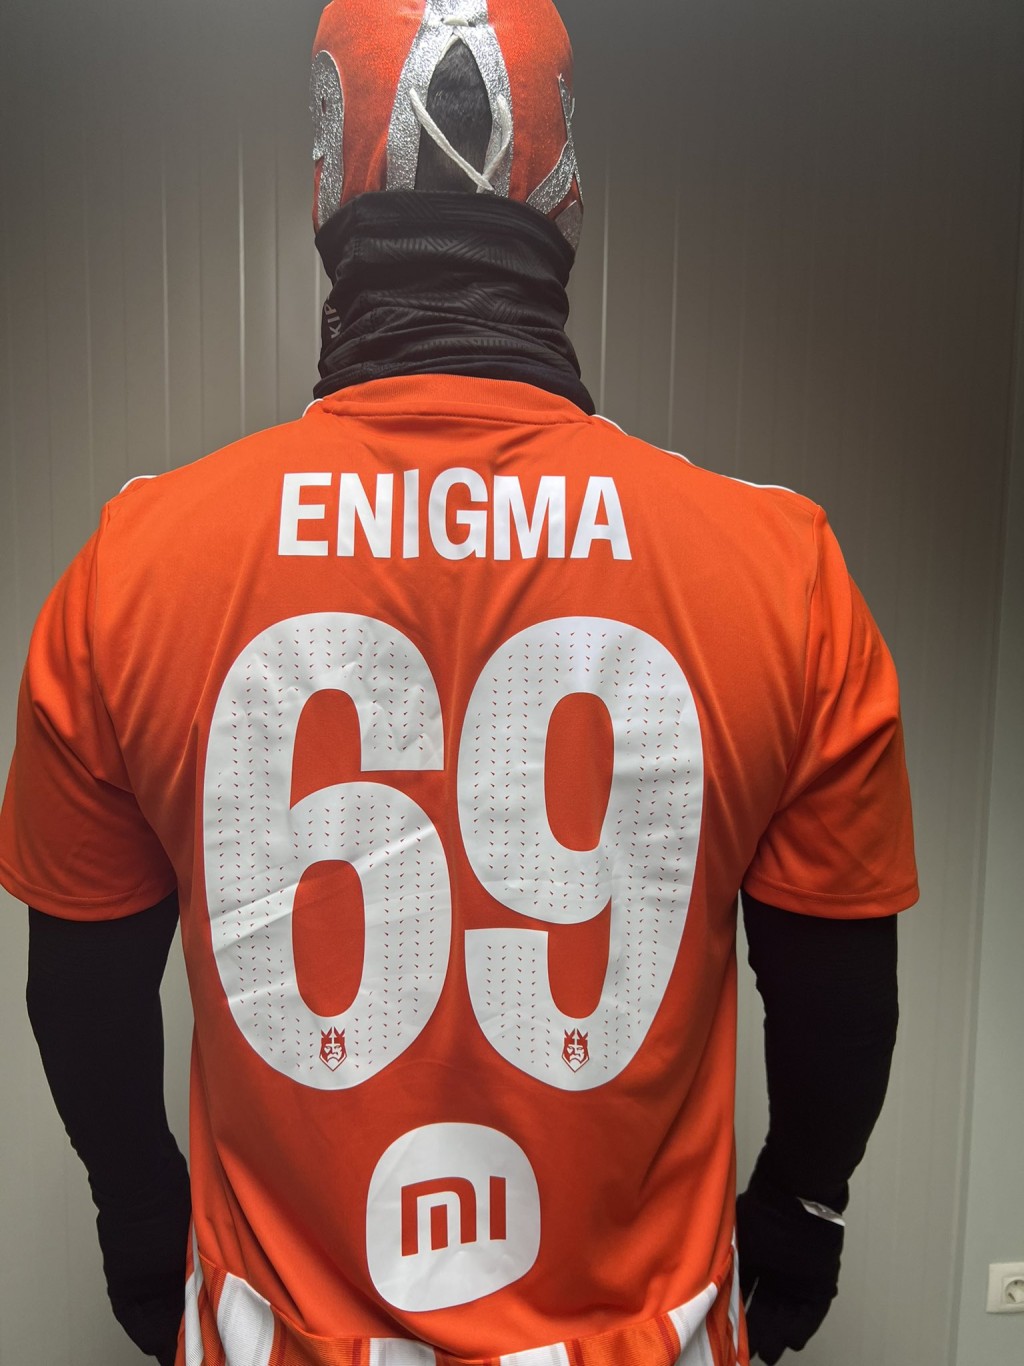 Enigma69是一名三十歲以下的現役西甲球員。網上圖片